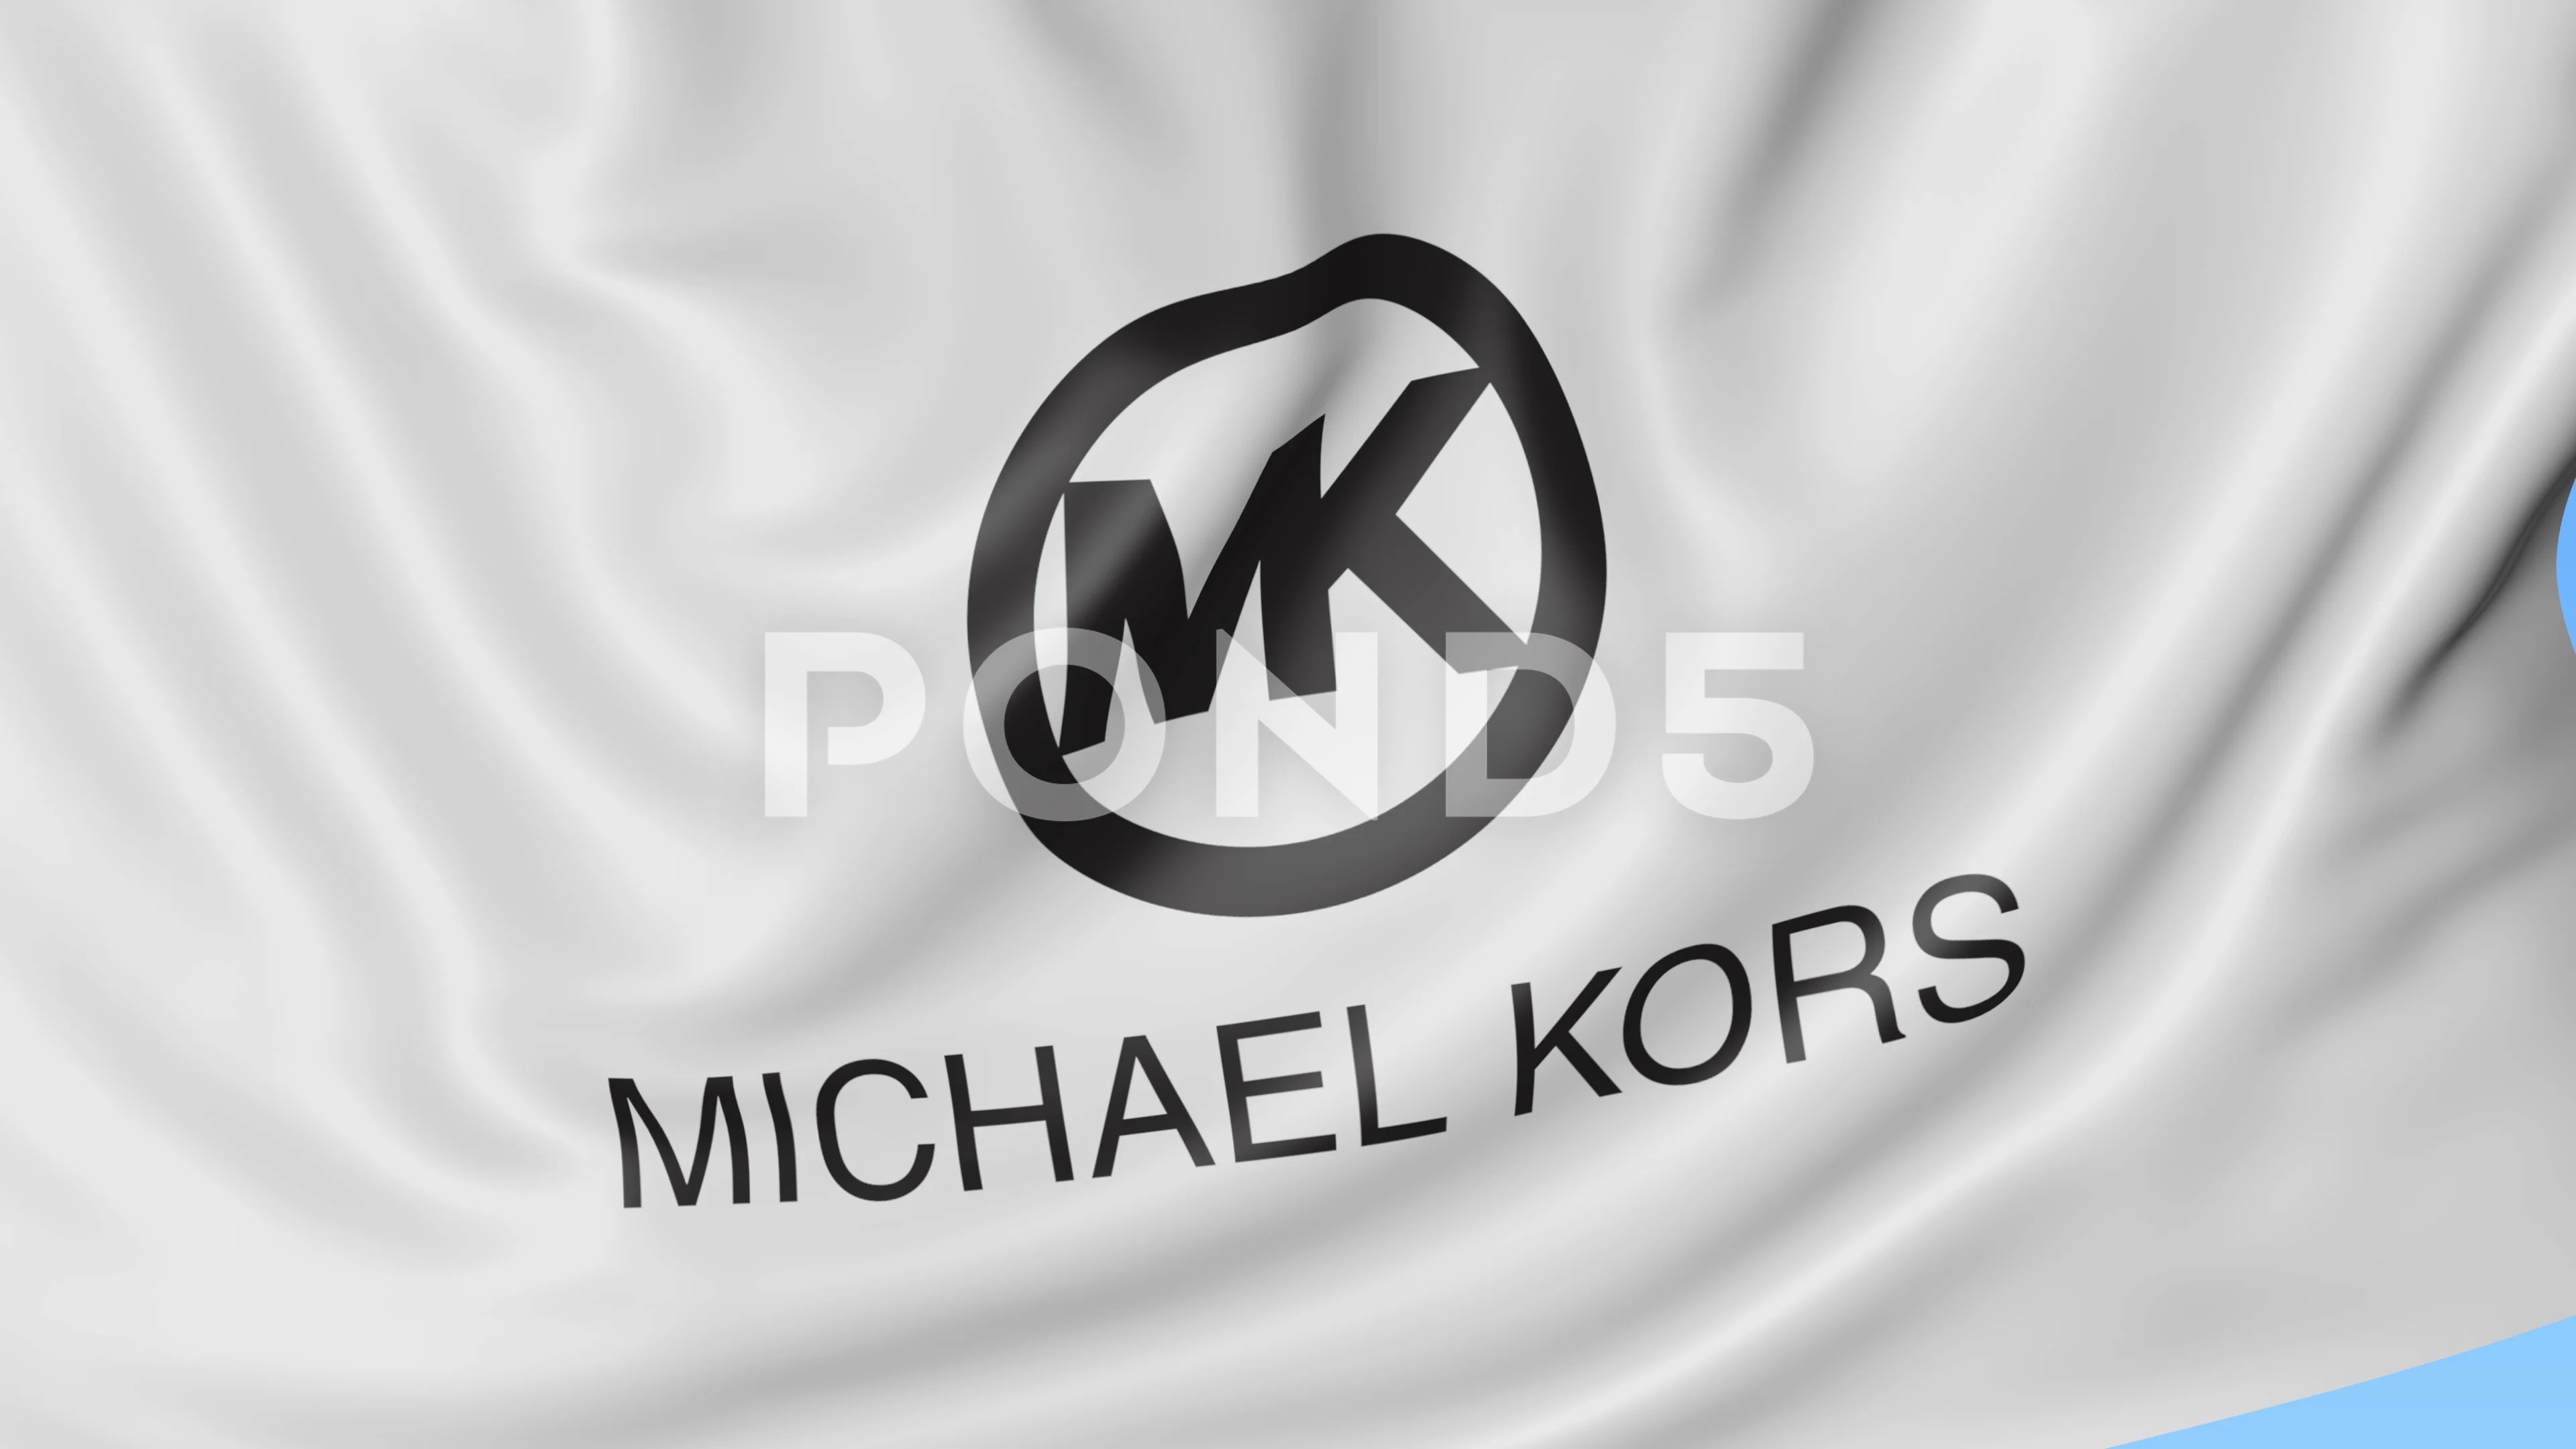 Michael Kors brand logo editorial stock photo. Image of icon